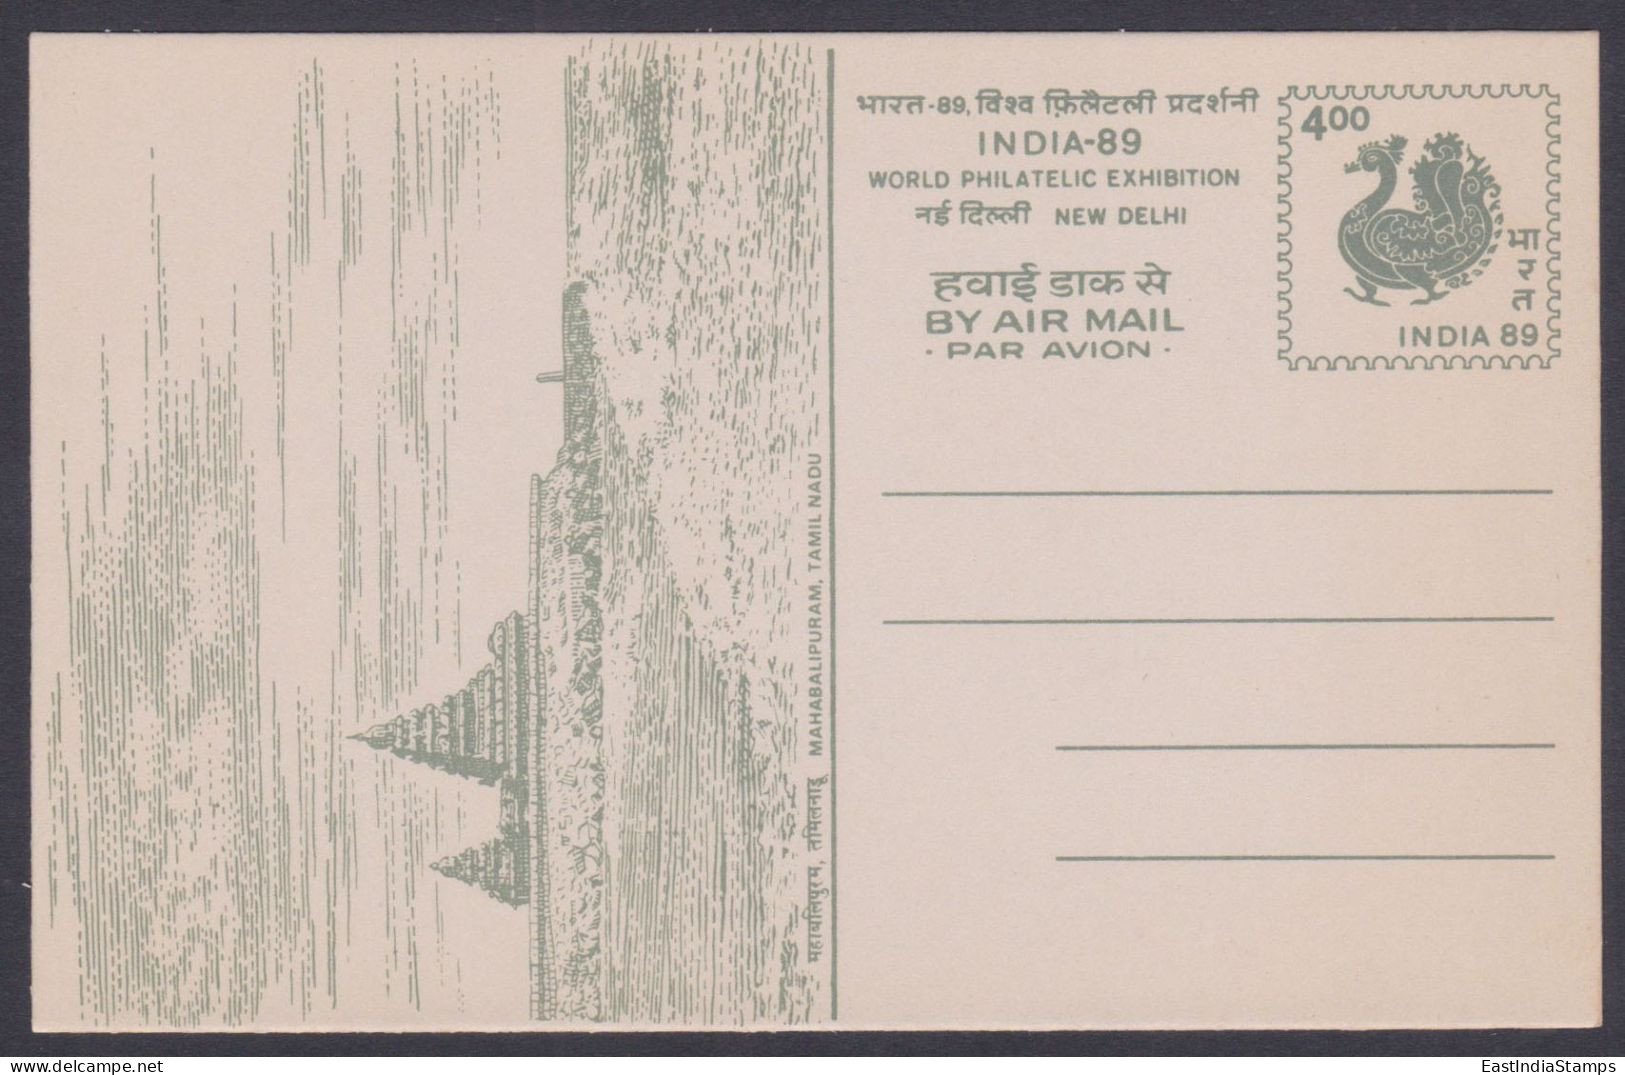 Inde India 1989 Mint Postcard World Philatelic Exhibition, Stamp, Mahabalipuram, Temple, Hinduism Architecture, Monument - Inde